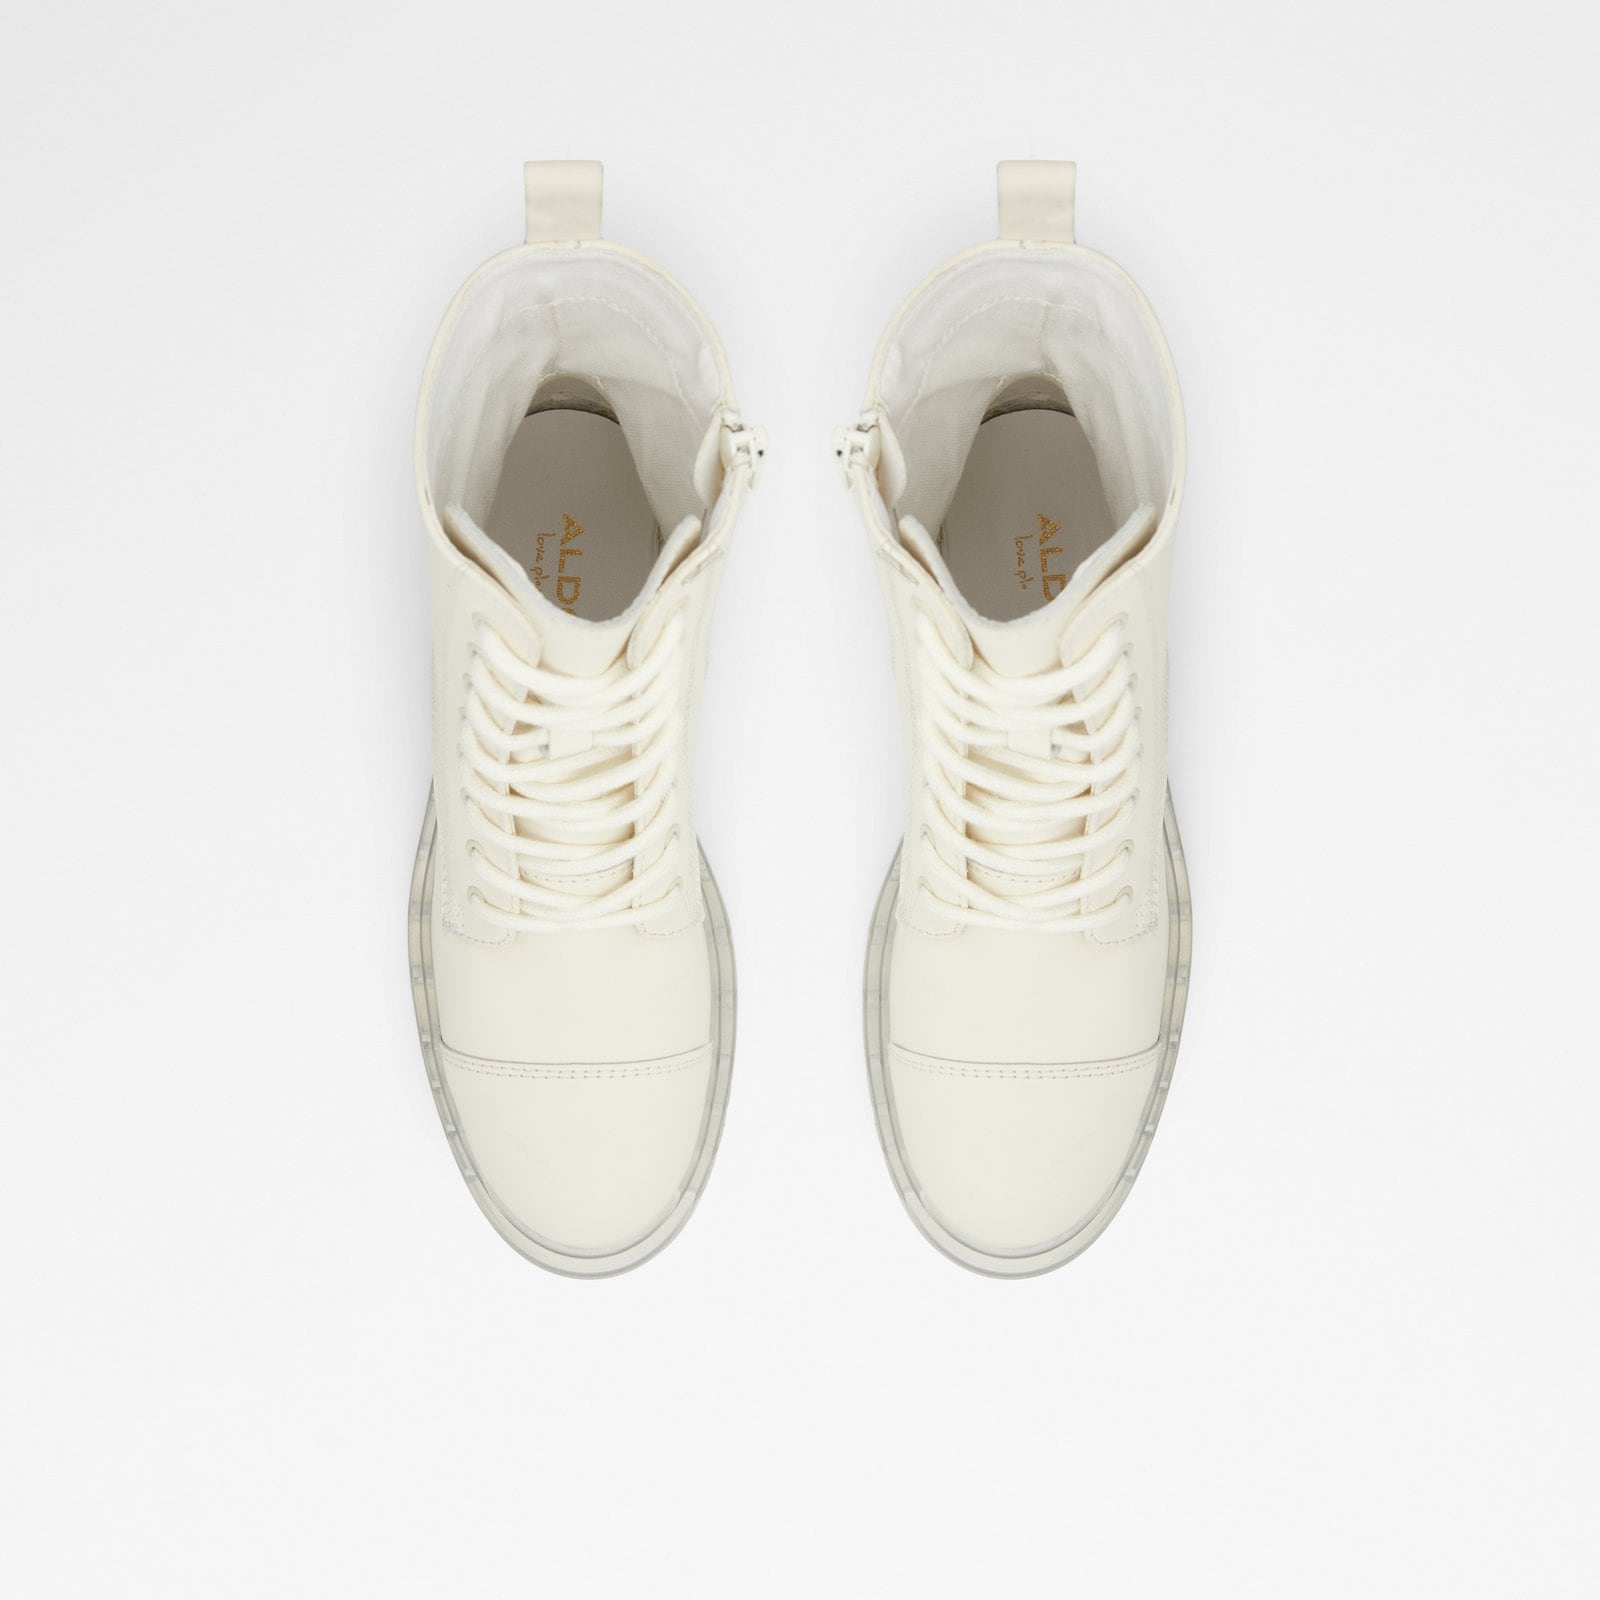 Reilly Women Shoes - White - ALDO KSA